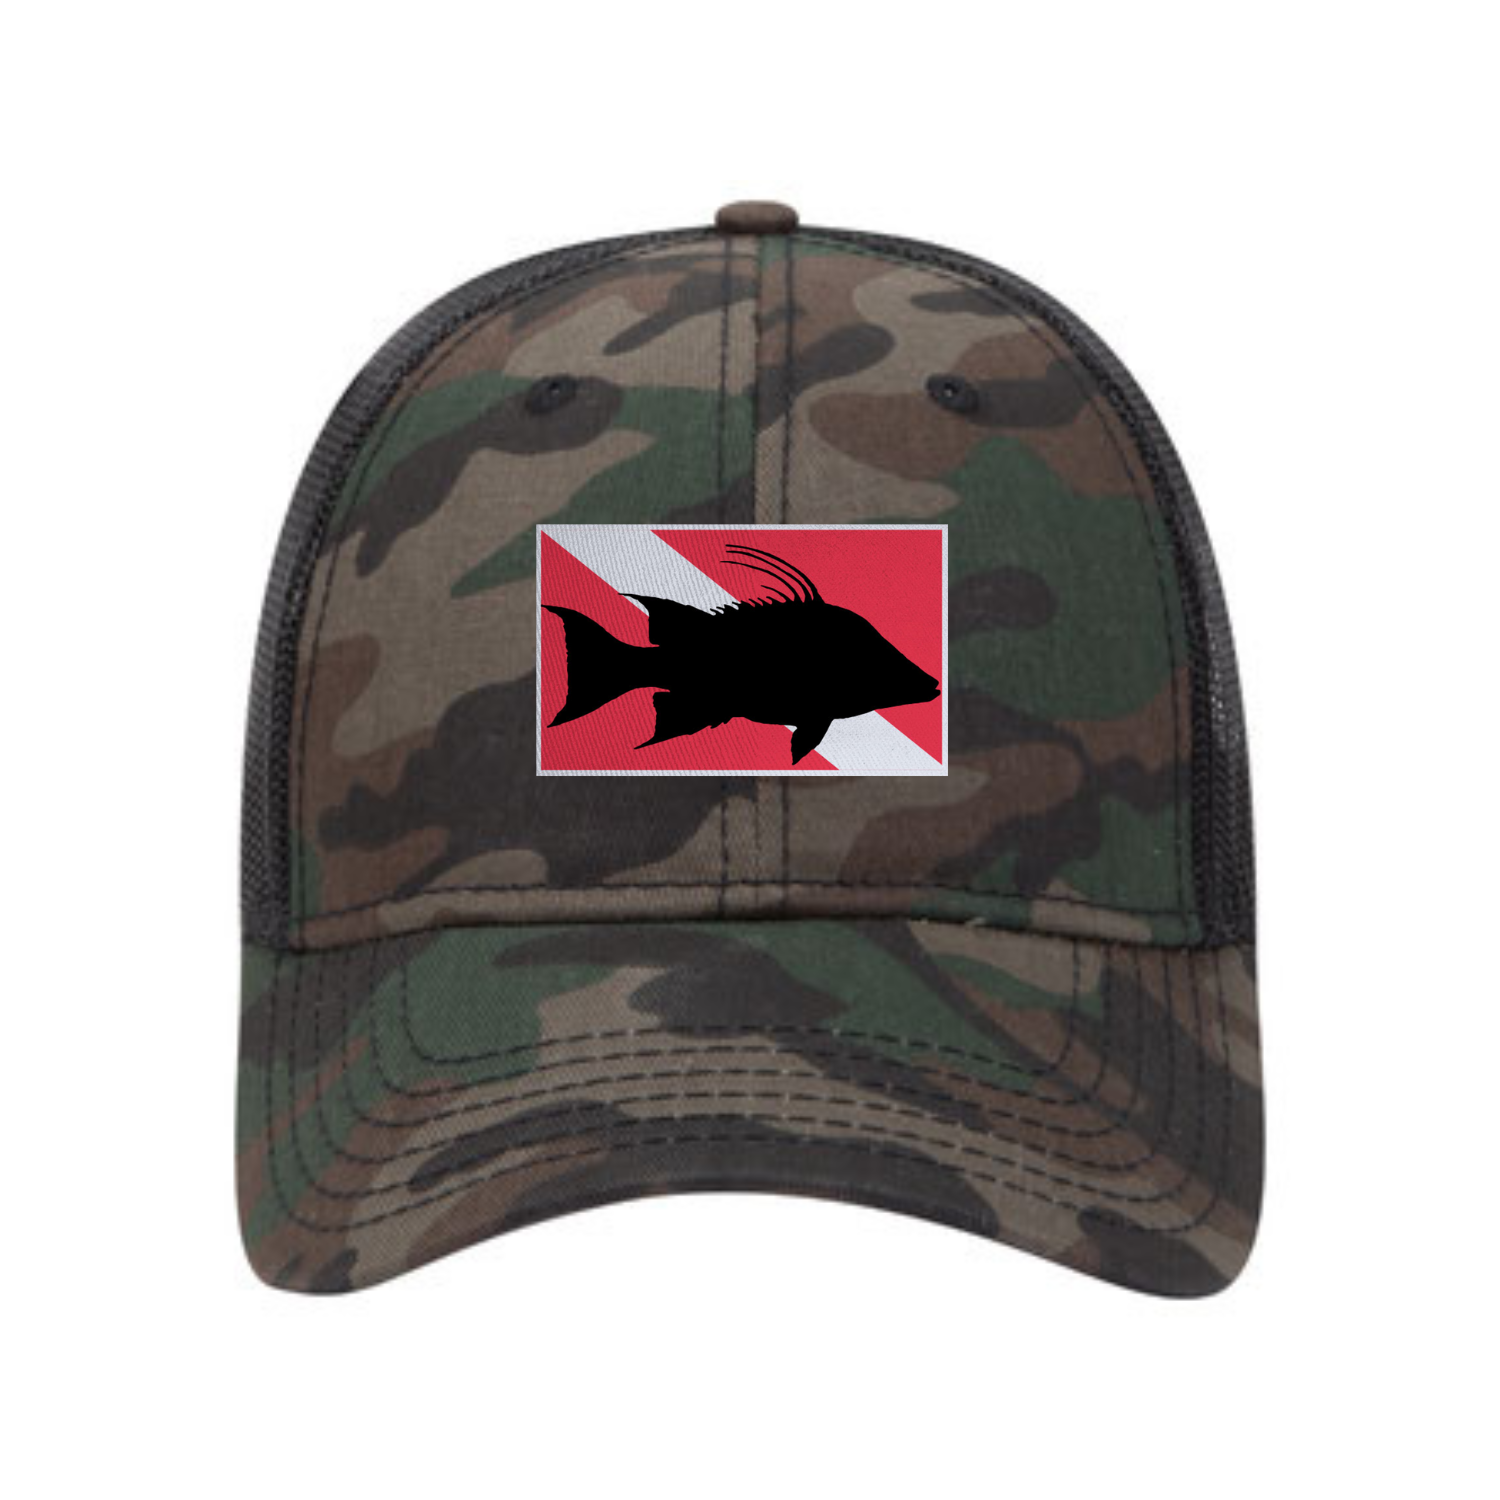 Hog Fish Dive FLag 6 Panel Cotton Twill Pro-Style Snap Back Trucker Hat